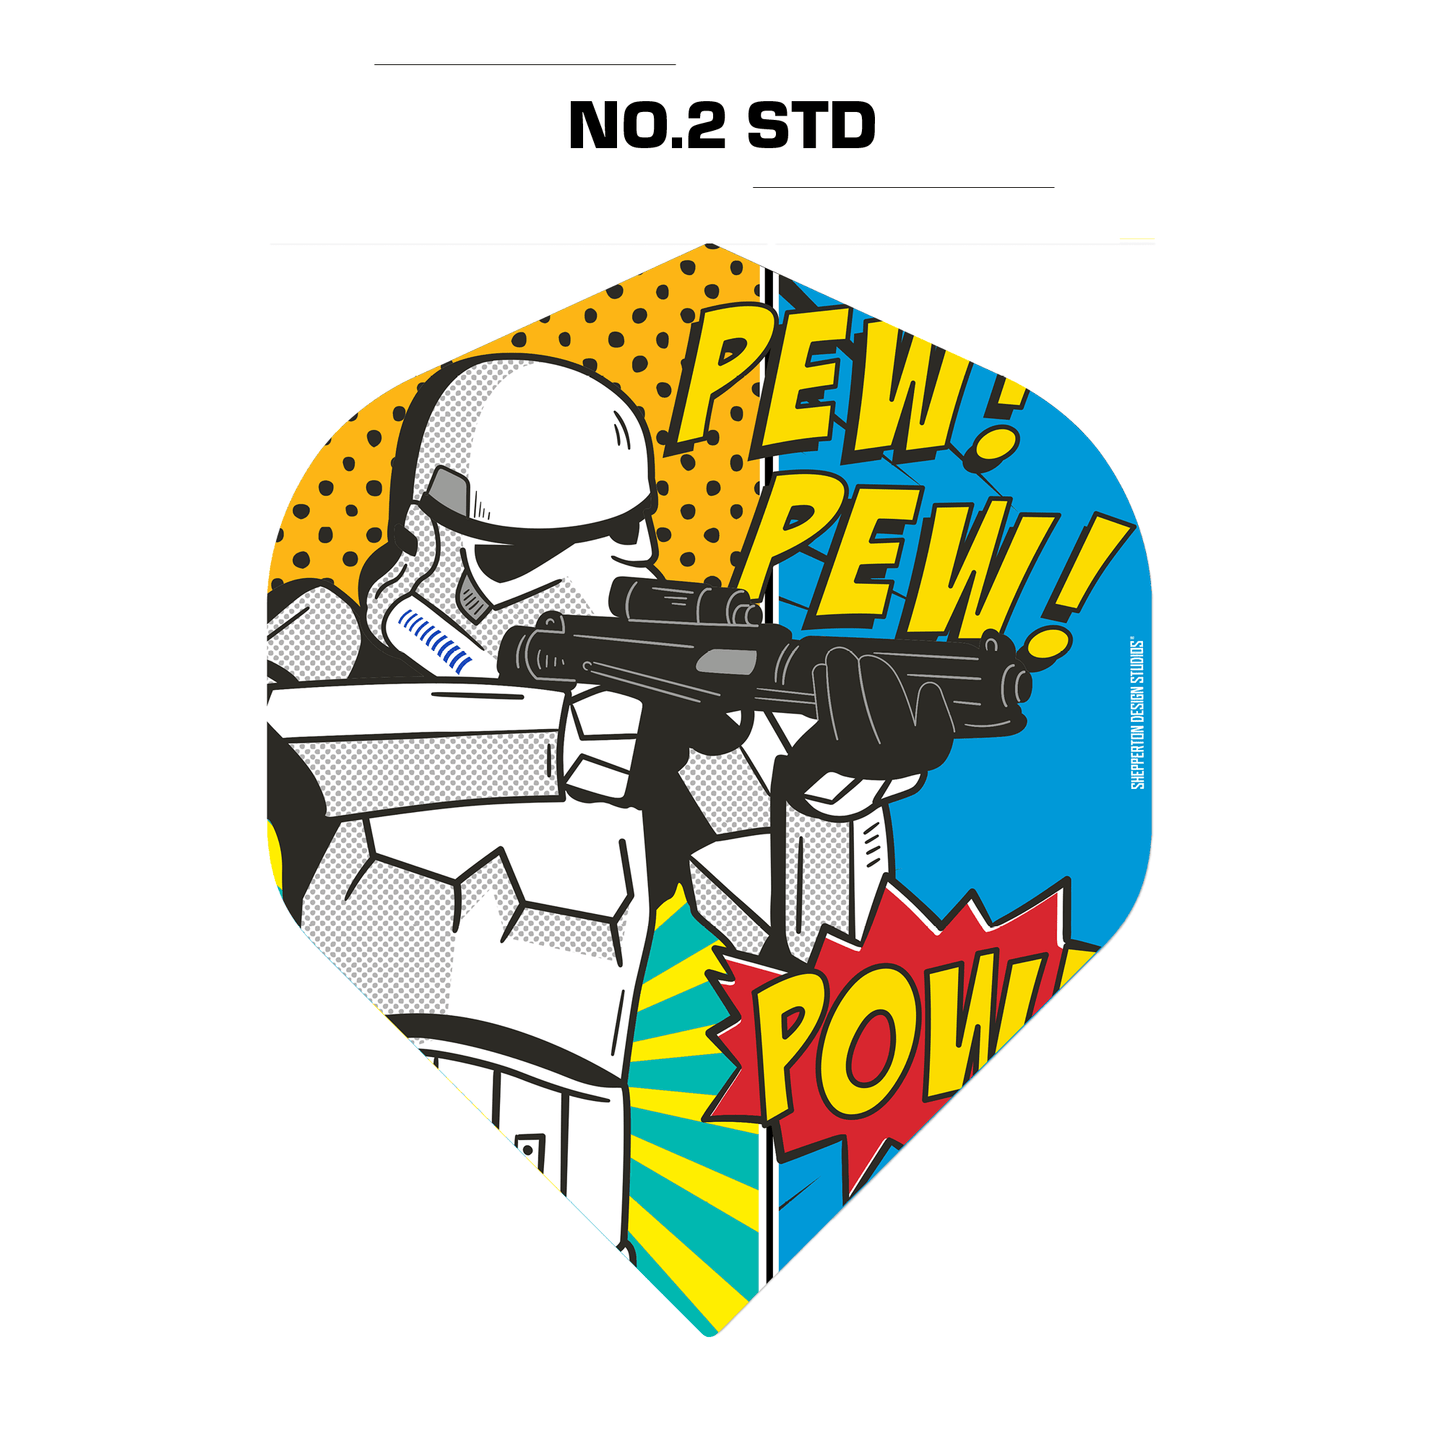 Original StormTrooper Dart Flights - Official Licensed - No2 - Std - Storm Trooper - Pew Pew Pow